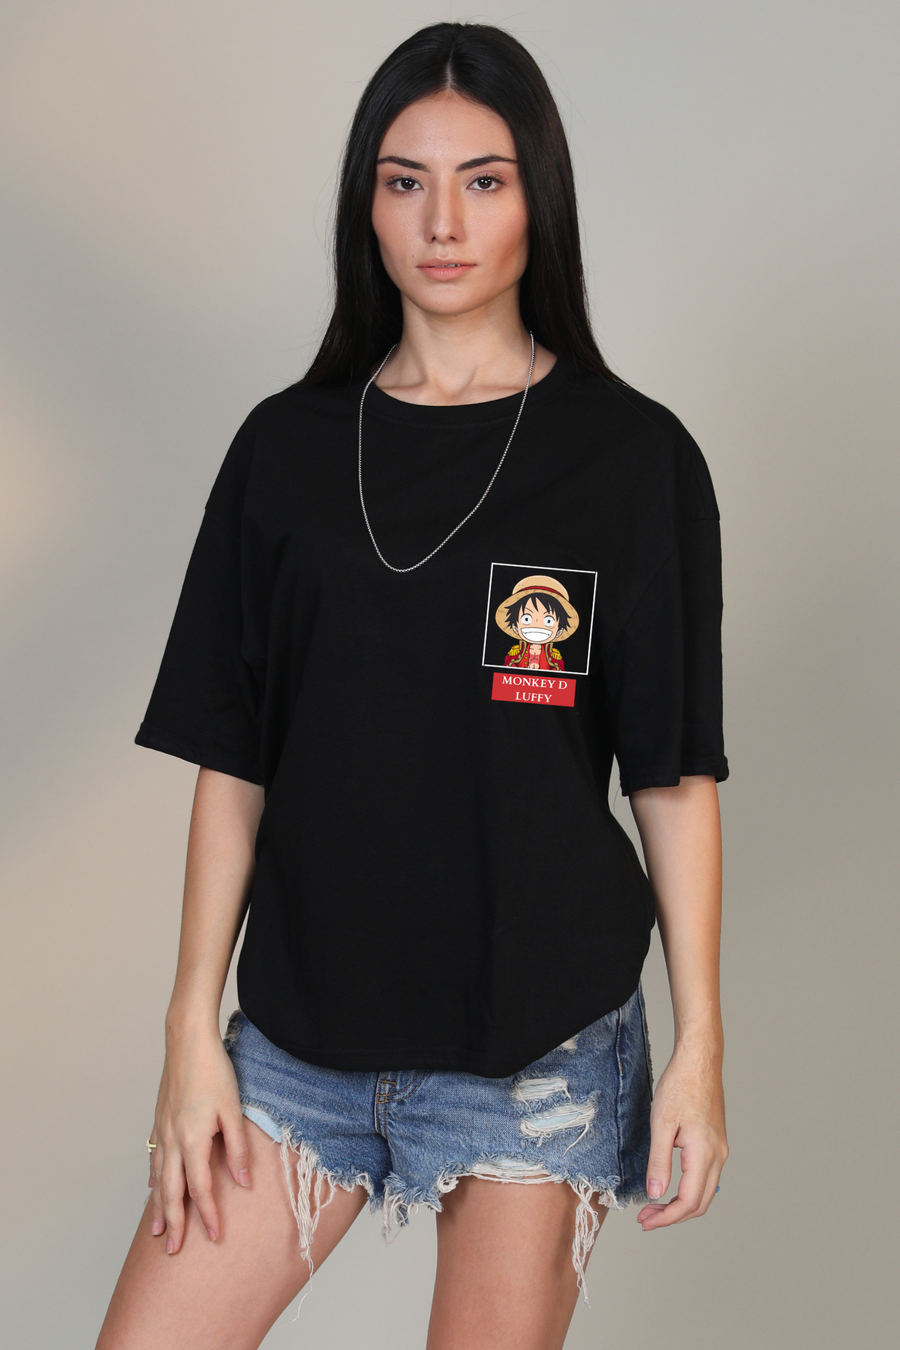 Monkey D Luffy- Oversized t-shirt